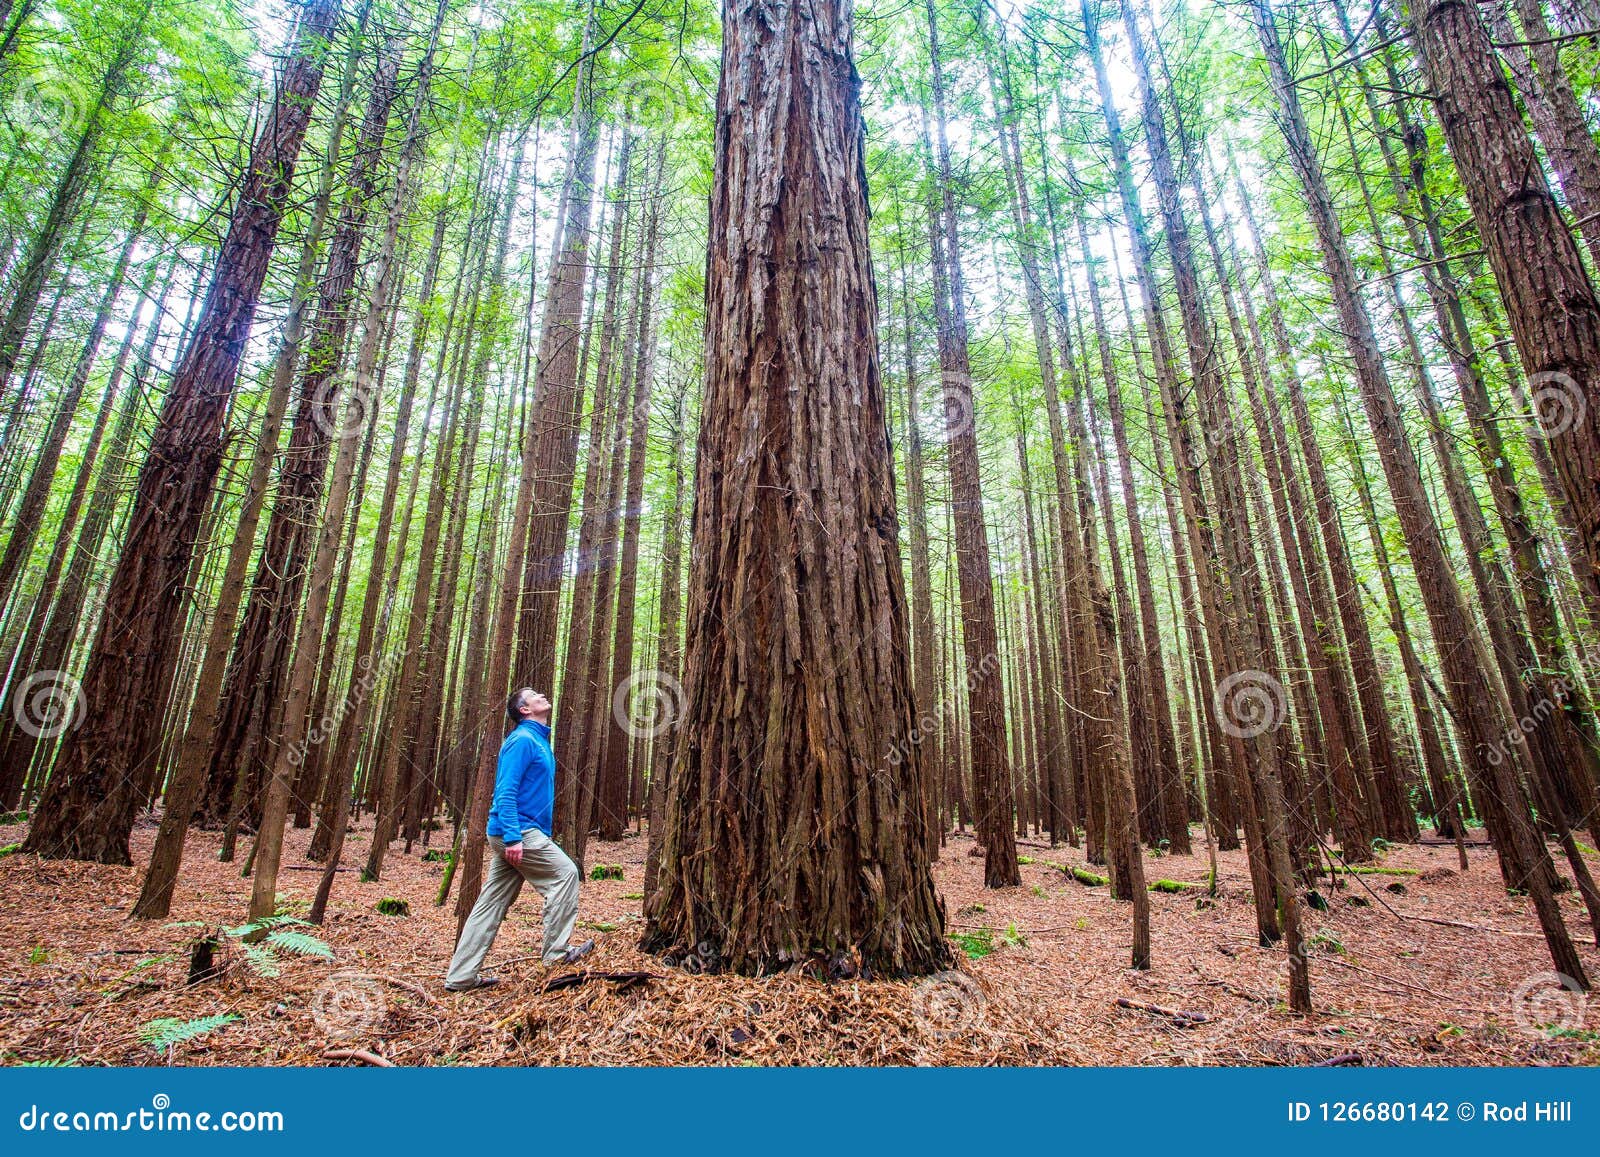 viewing the redwoods - rotorua